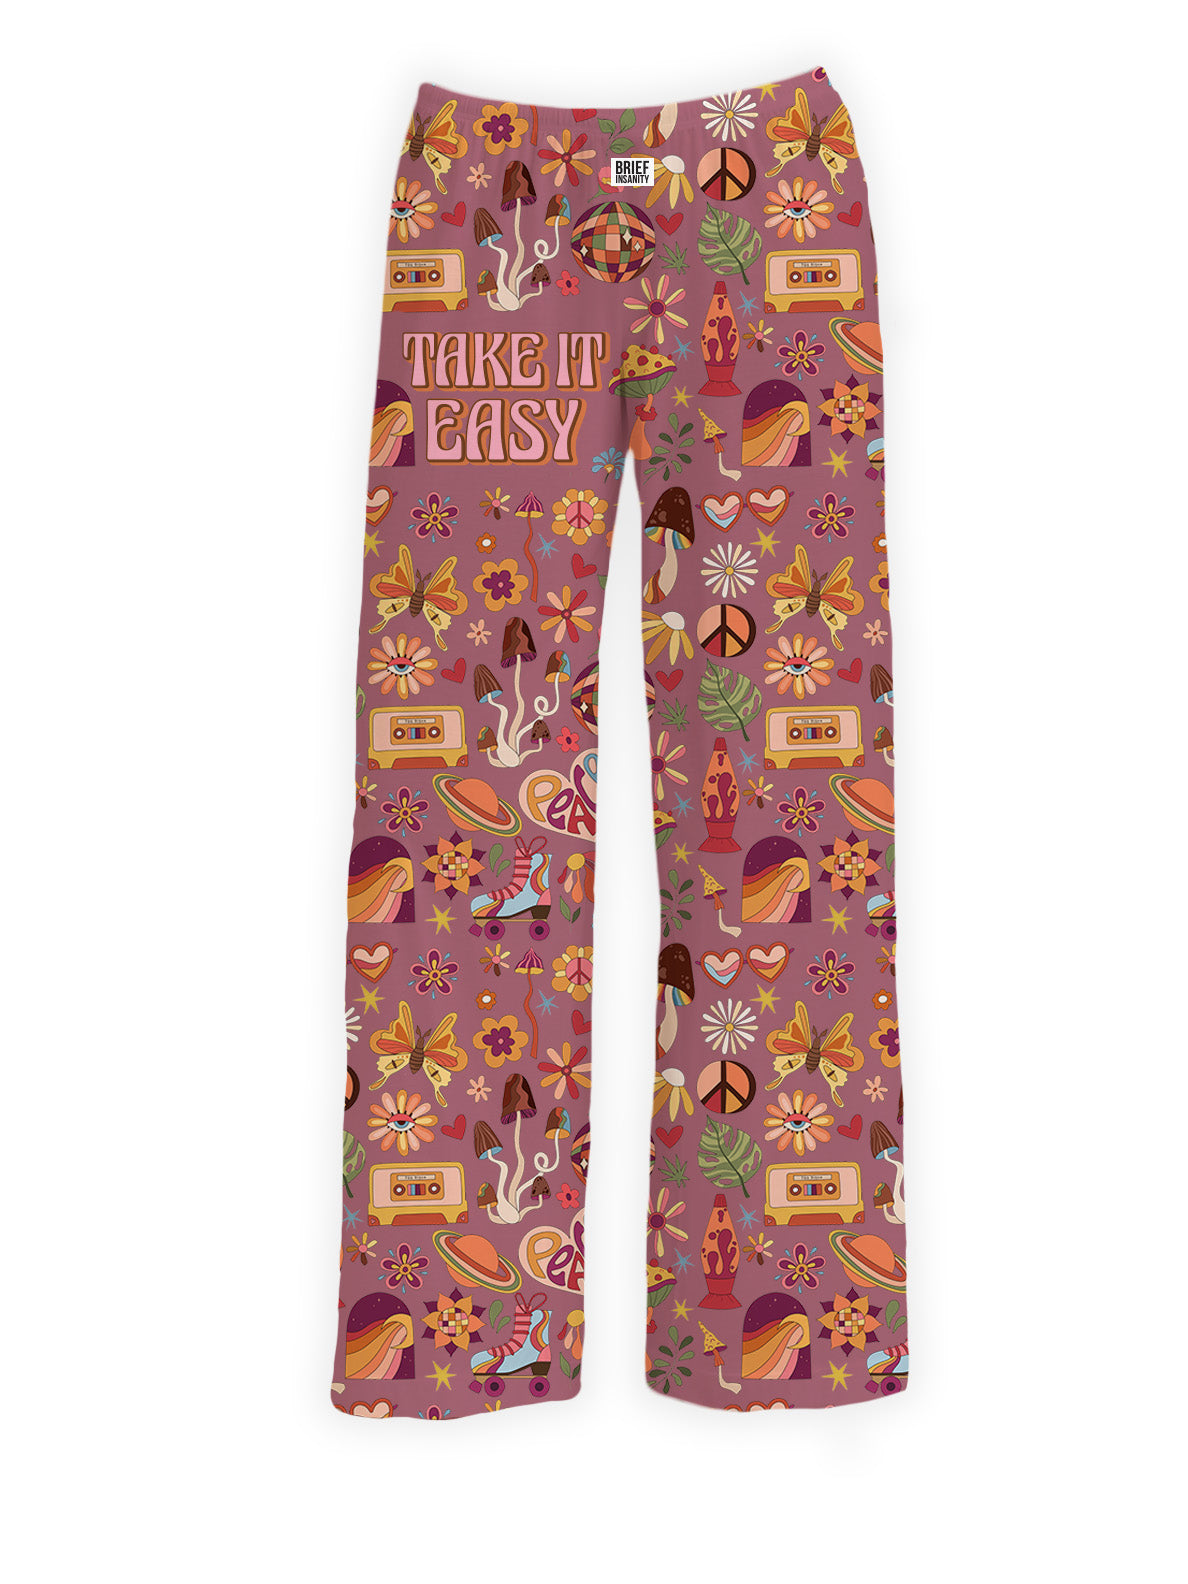 BRIEF INSANITY's Take It Easy Groovy Pajama Lounge Pants